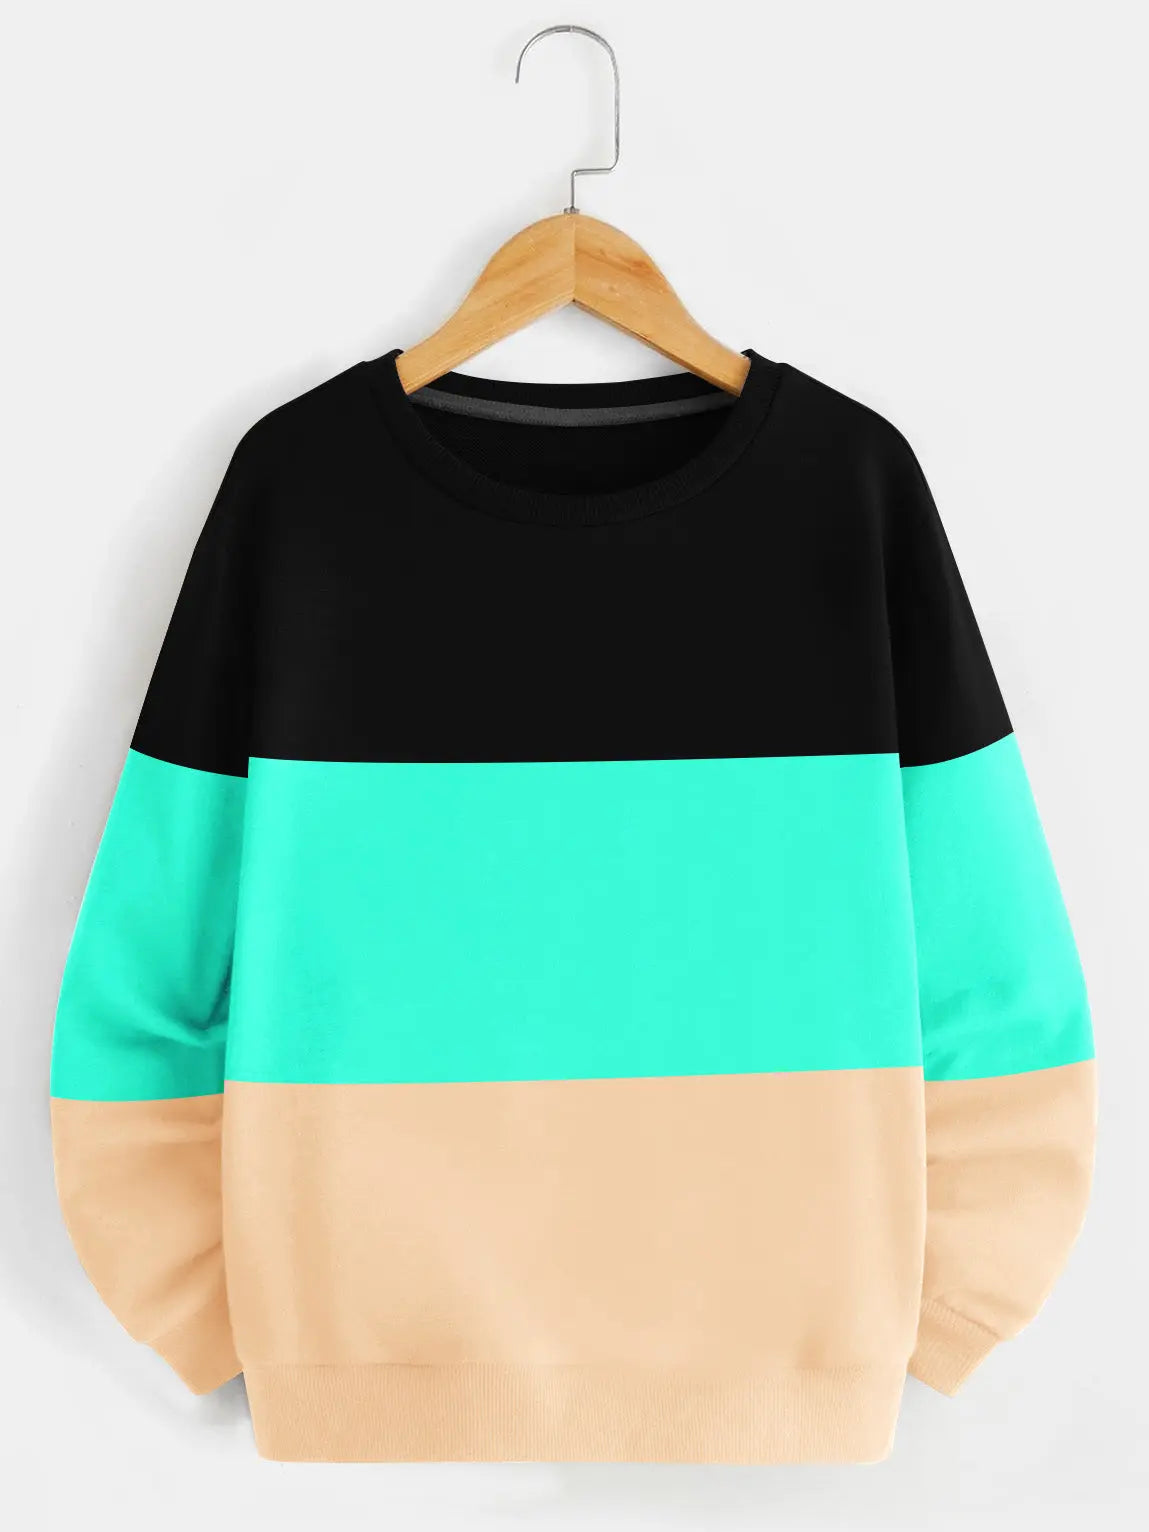 Next Fleece Panel Style Sweatshirt For Kids-Black with Cyan Green & Skin-SP150